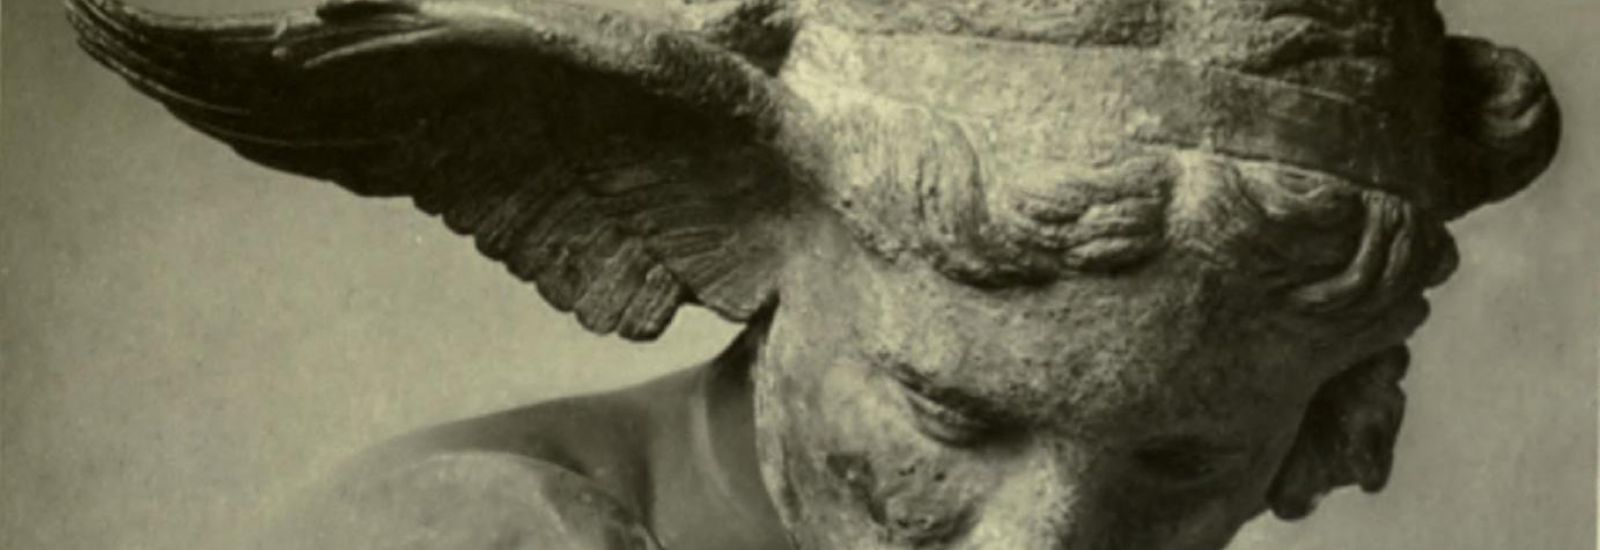 Bronze head of Hypnos, god of Sleep